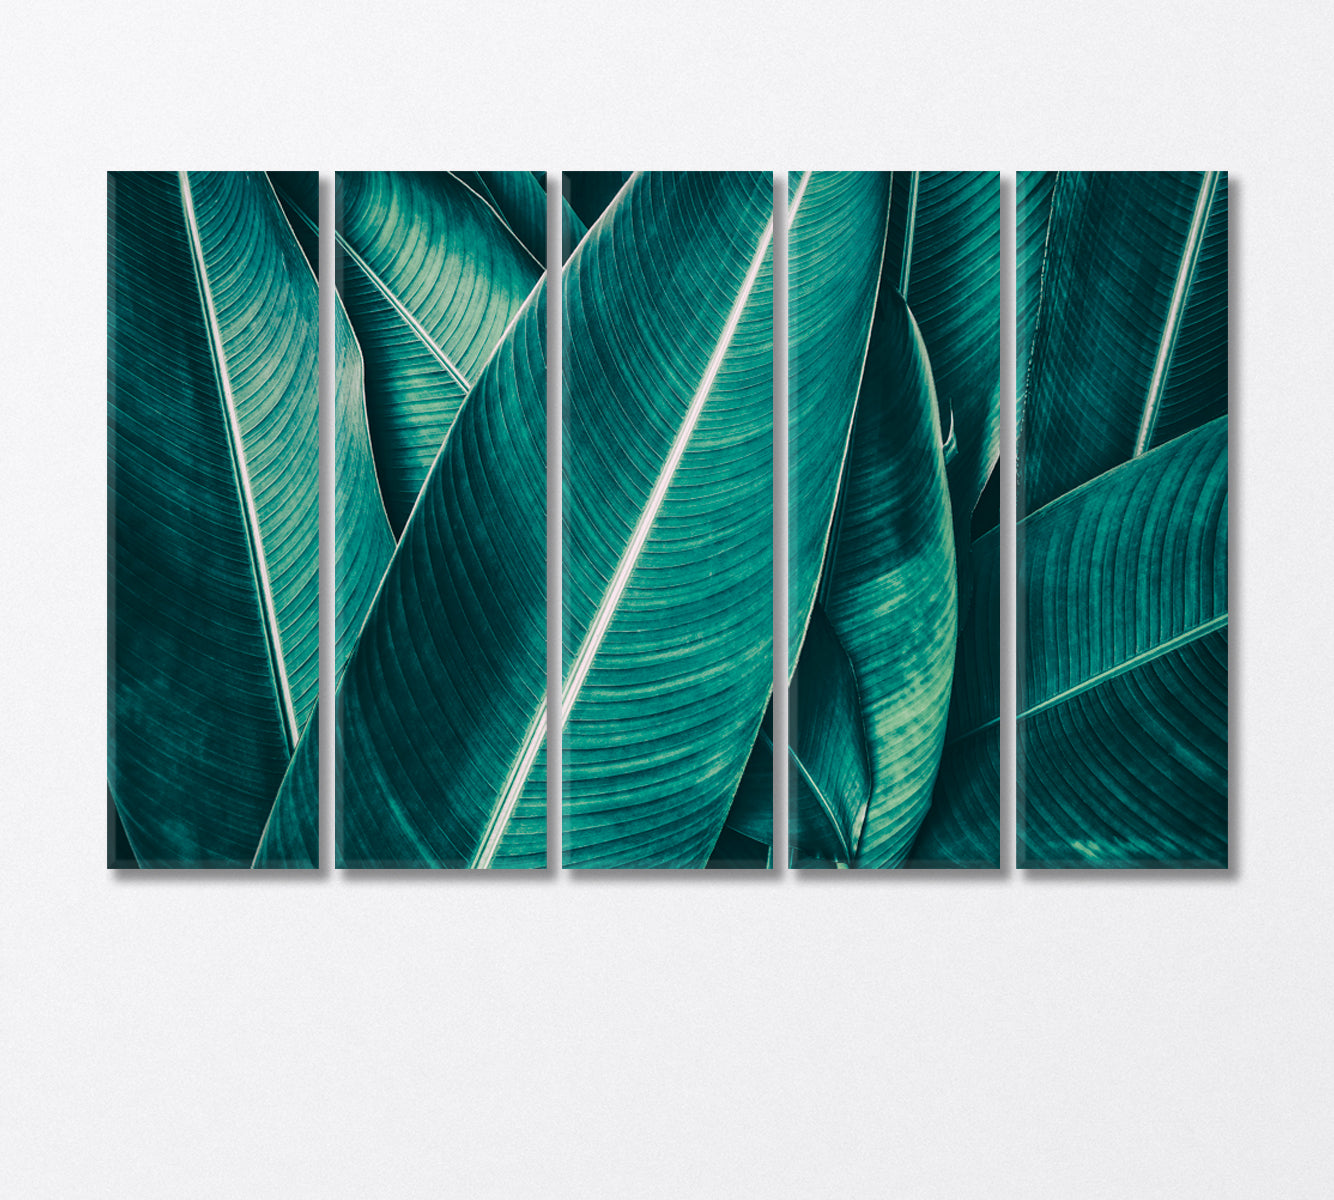 Large Tropical Leaves Canvas Print-Canvas Print-CetArt-5 Panels-36x24 inches-CetArt